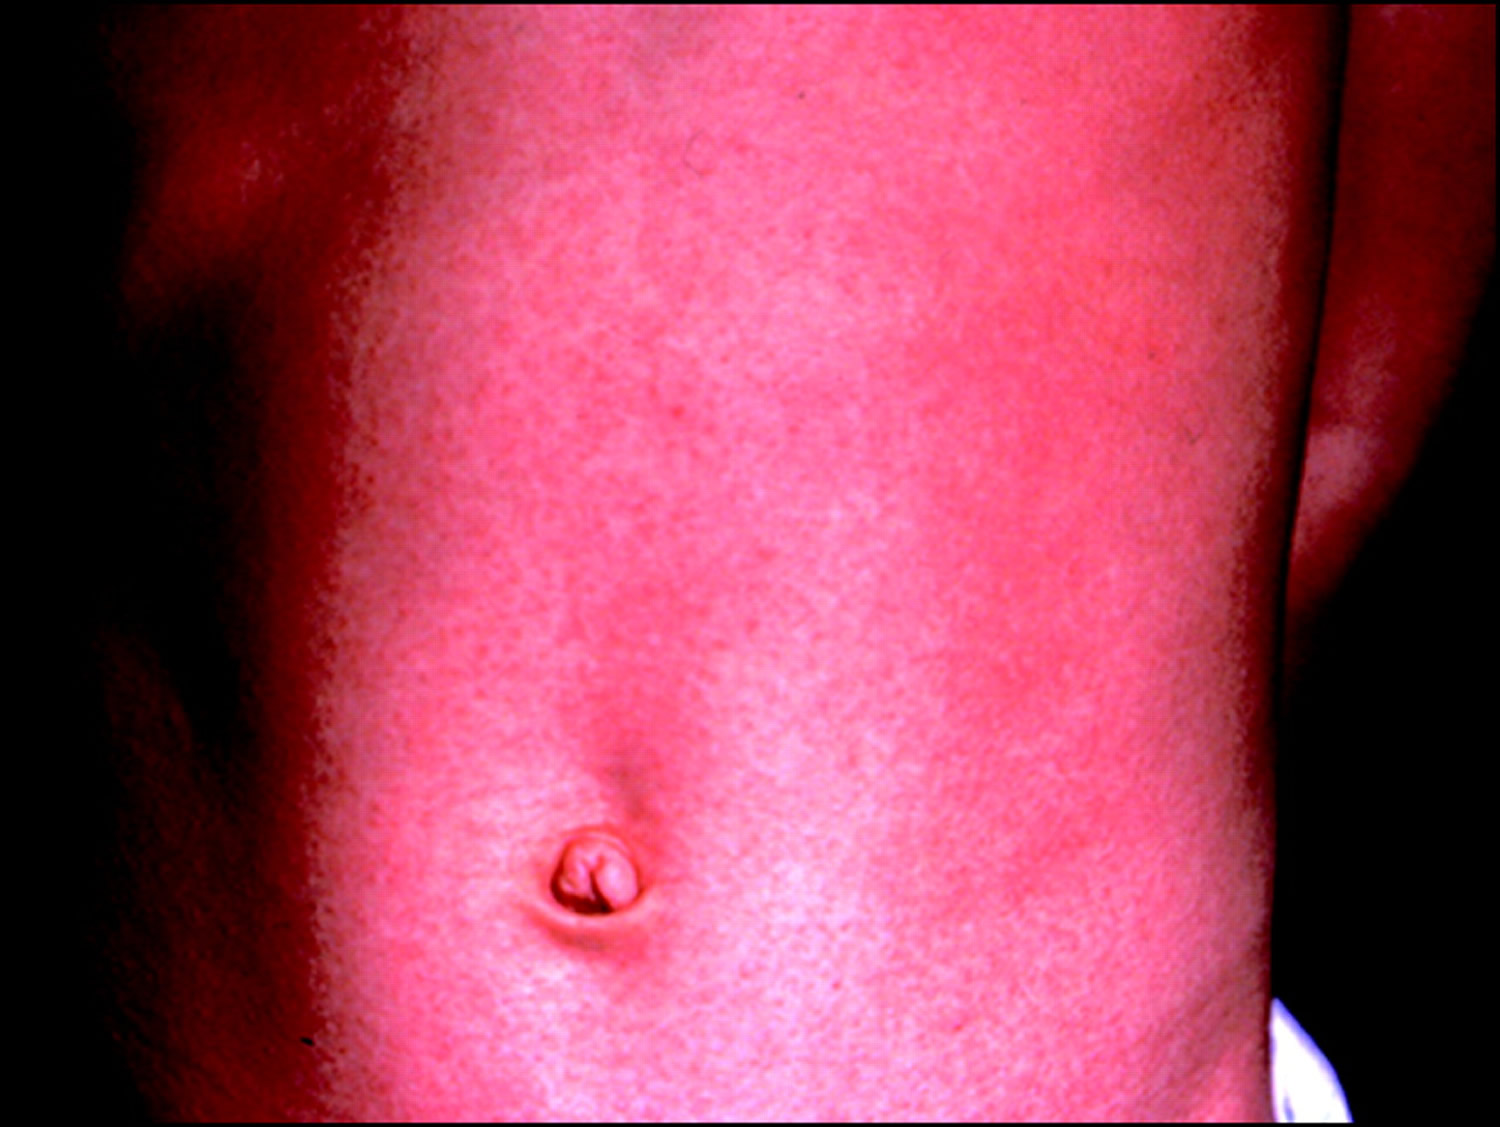 toxic shock syndrome skin rash